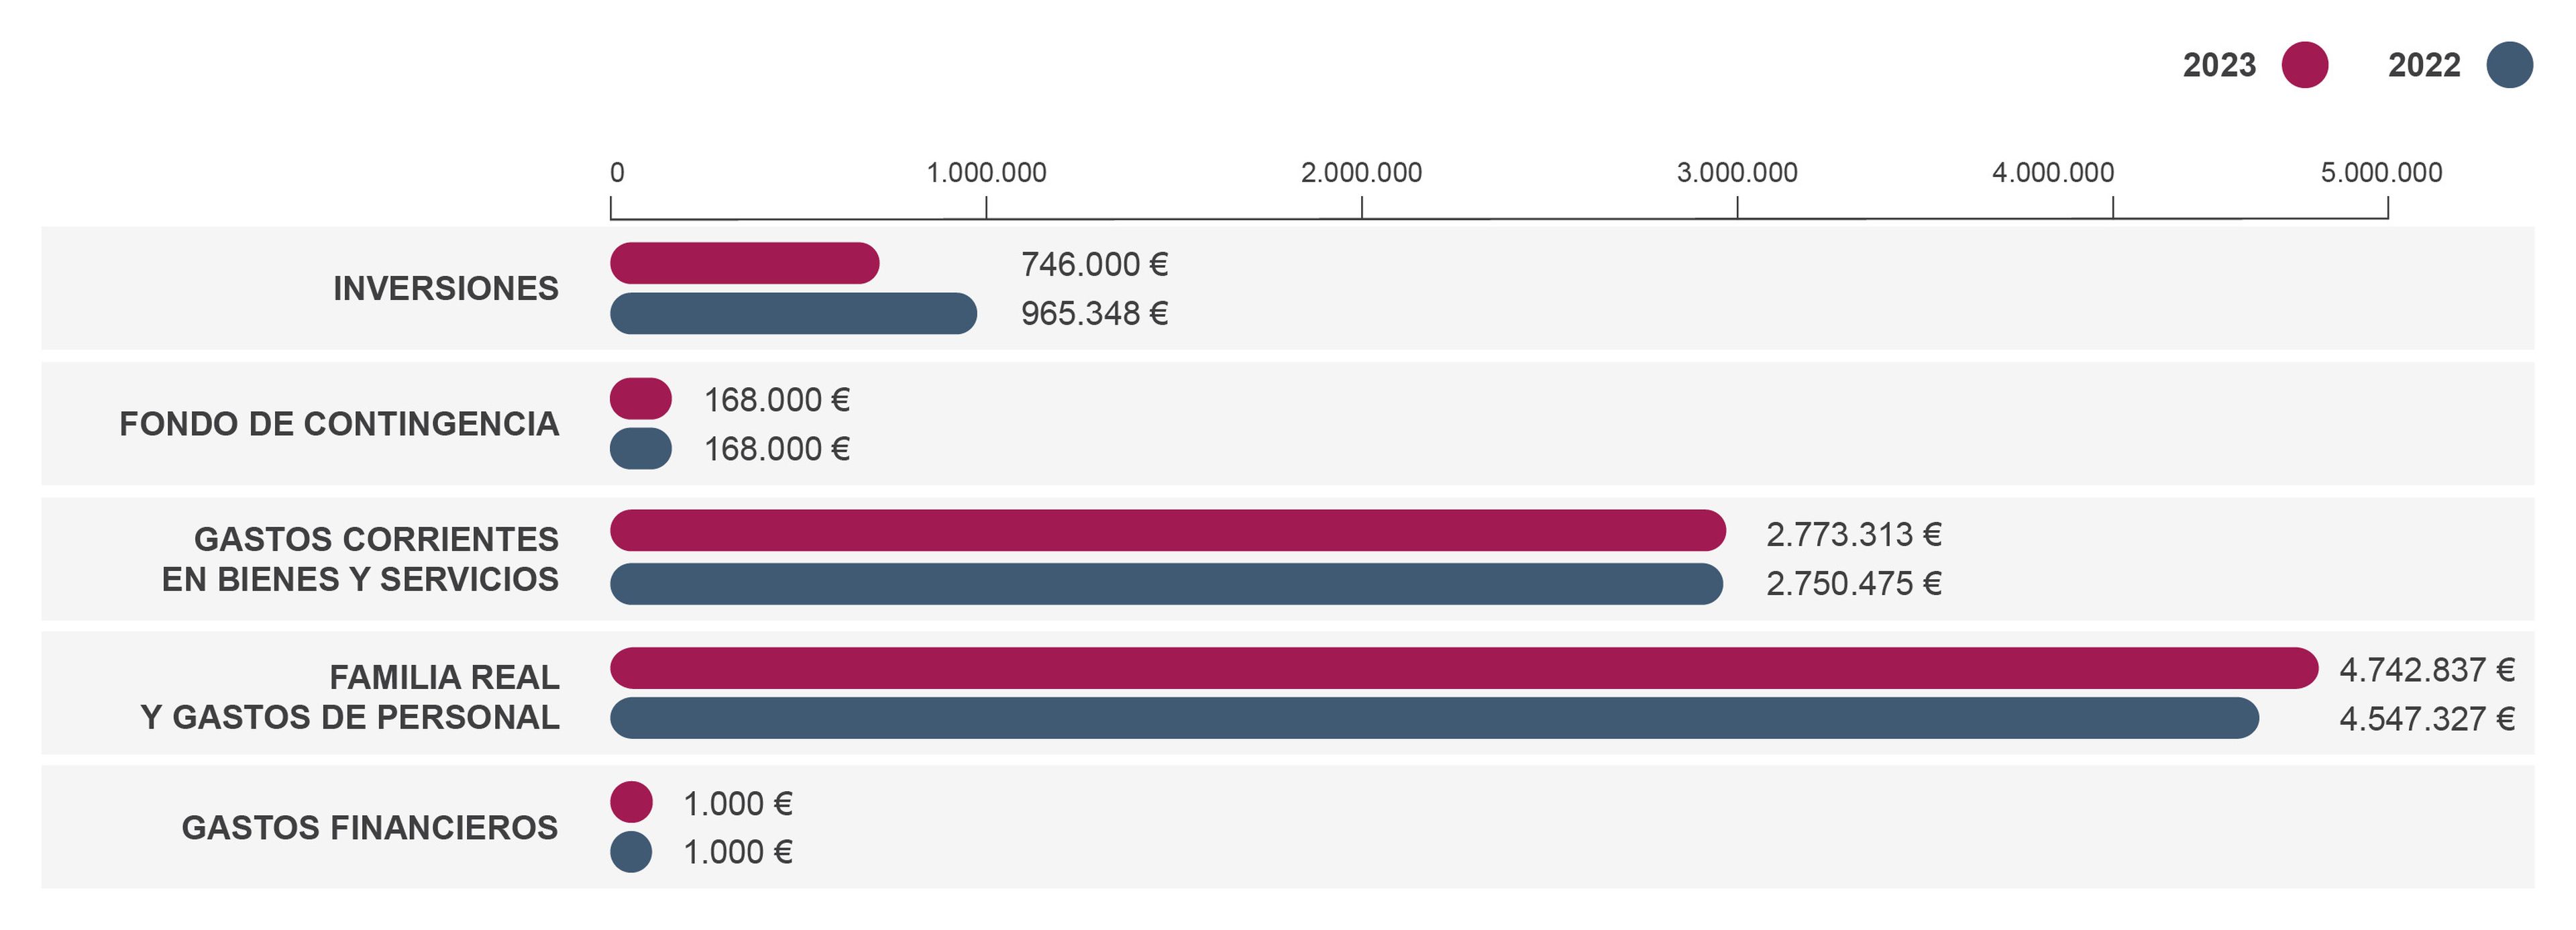 Casa Real: comparativa del presupuesto 2023 vs. 2022.